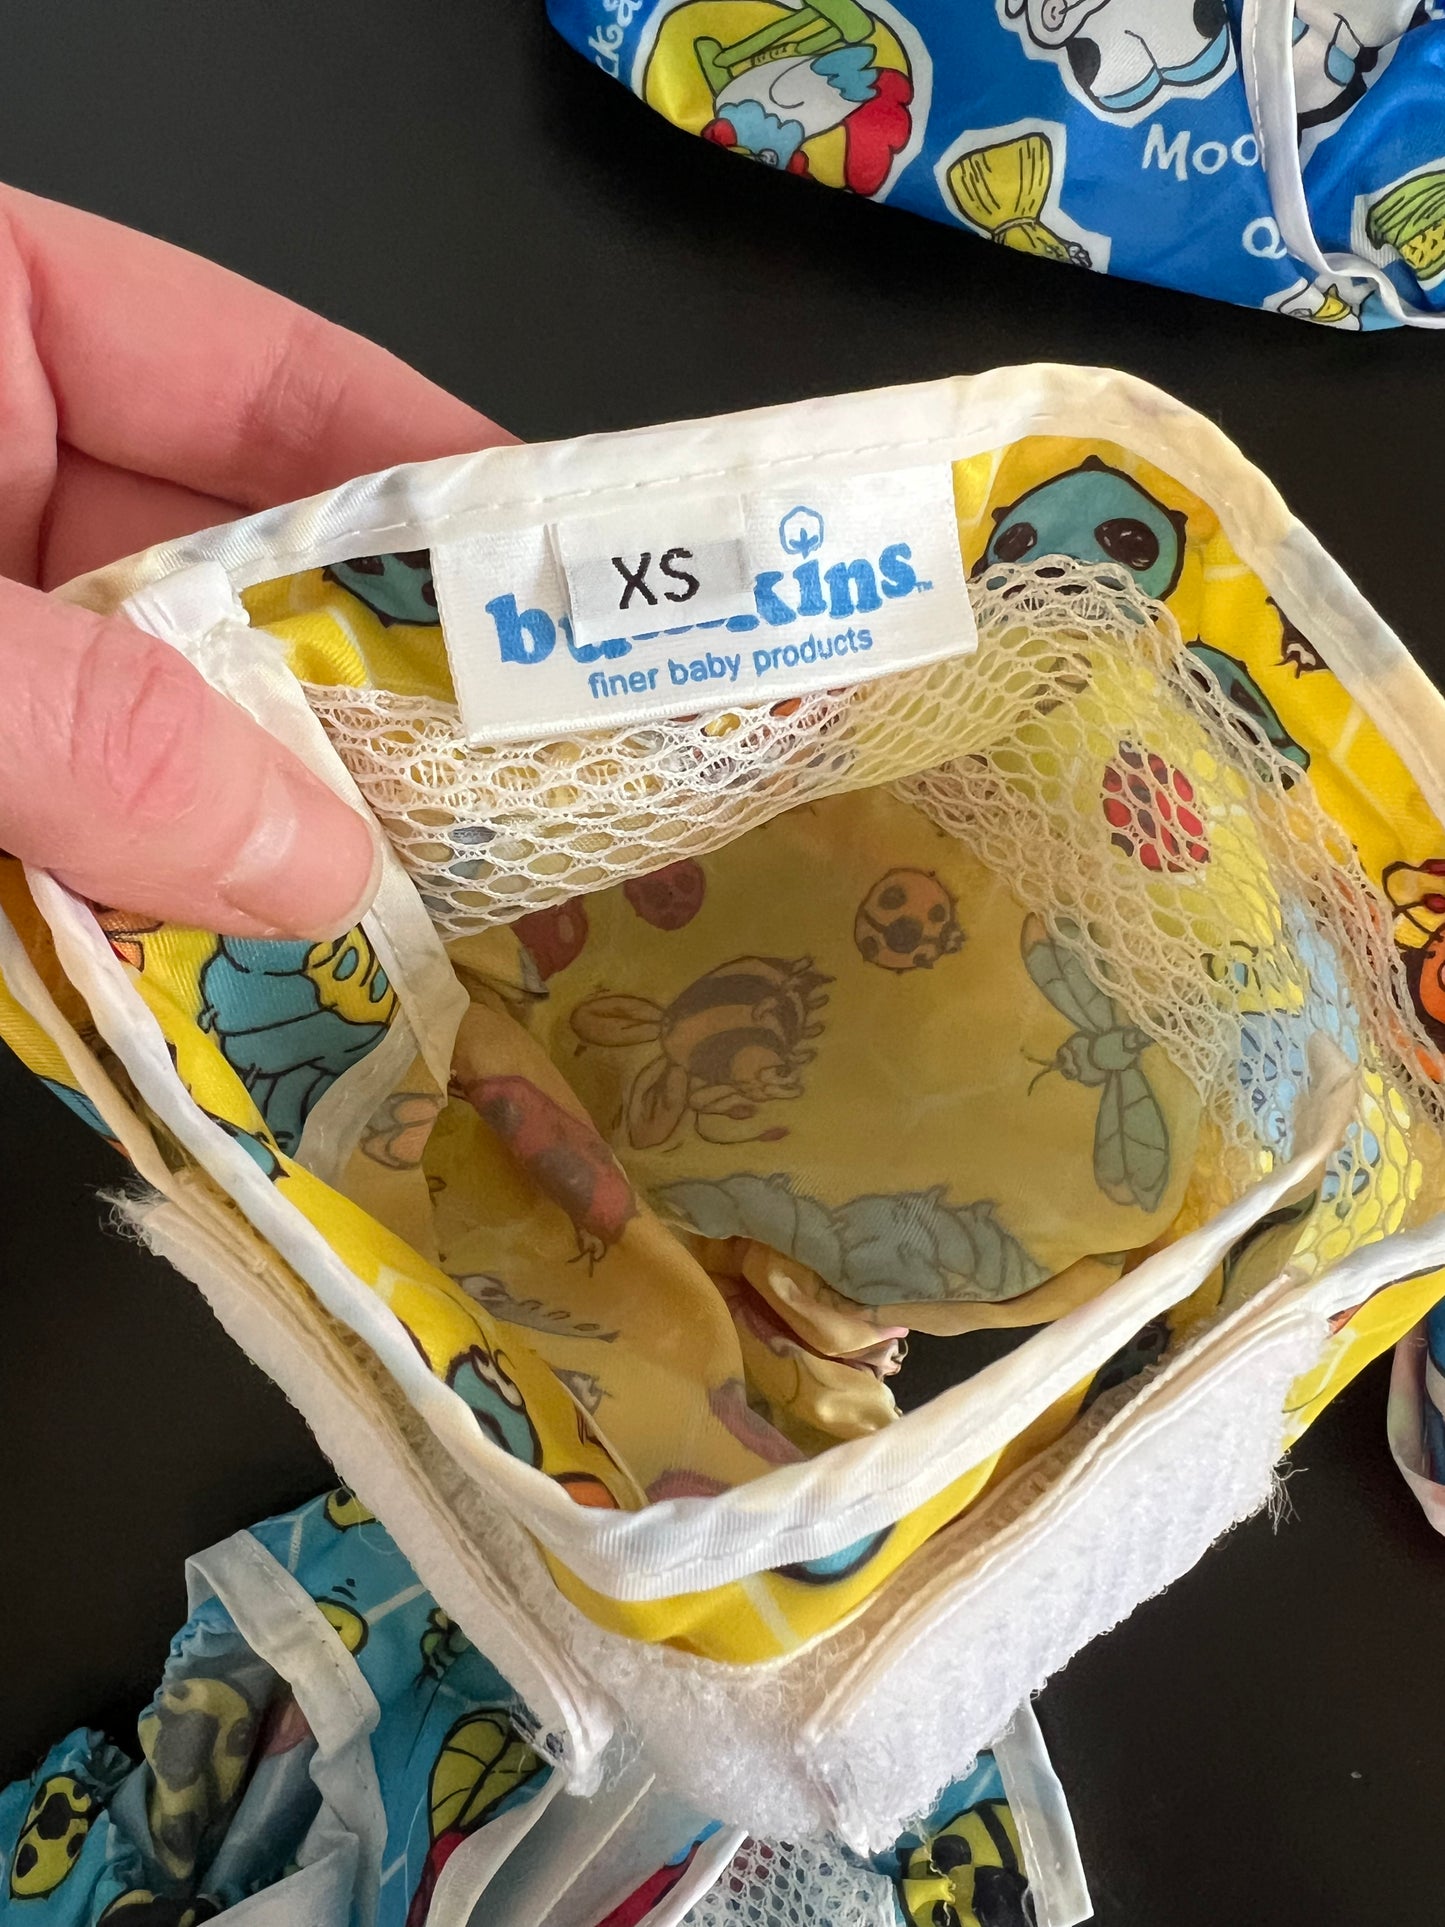 Set of 5 Newborn Cloth Diaper Covers Bumkins